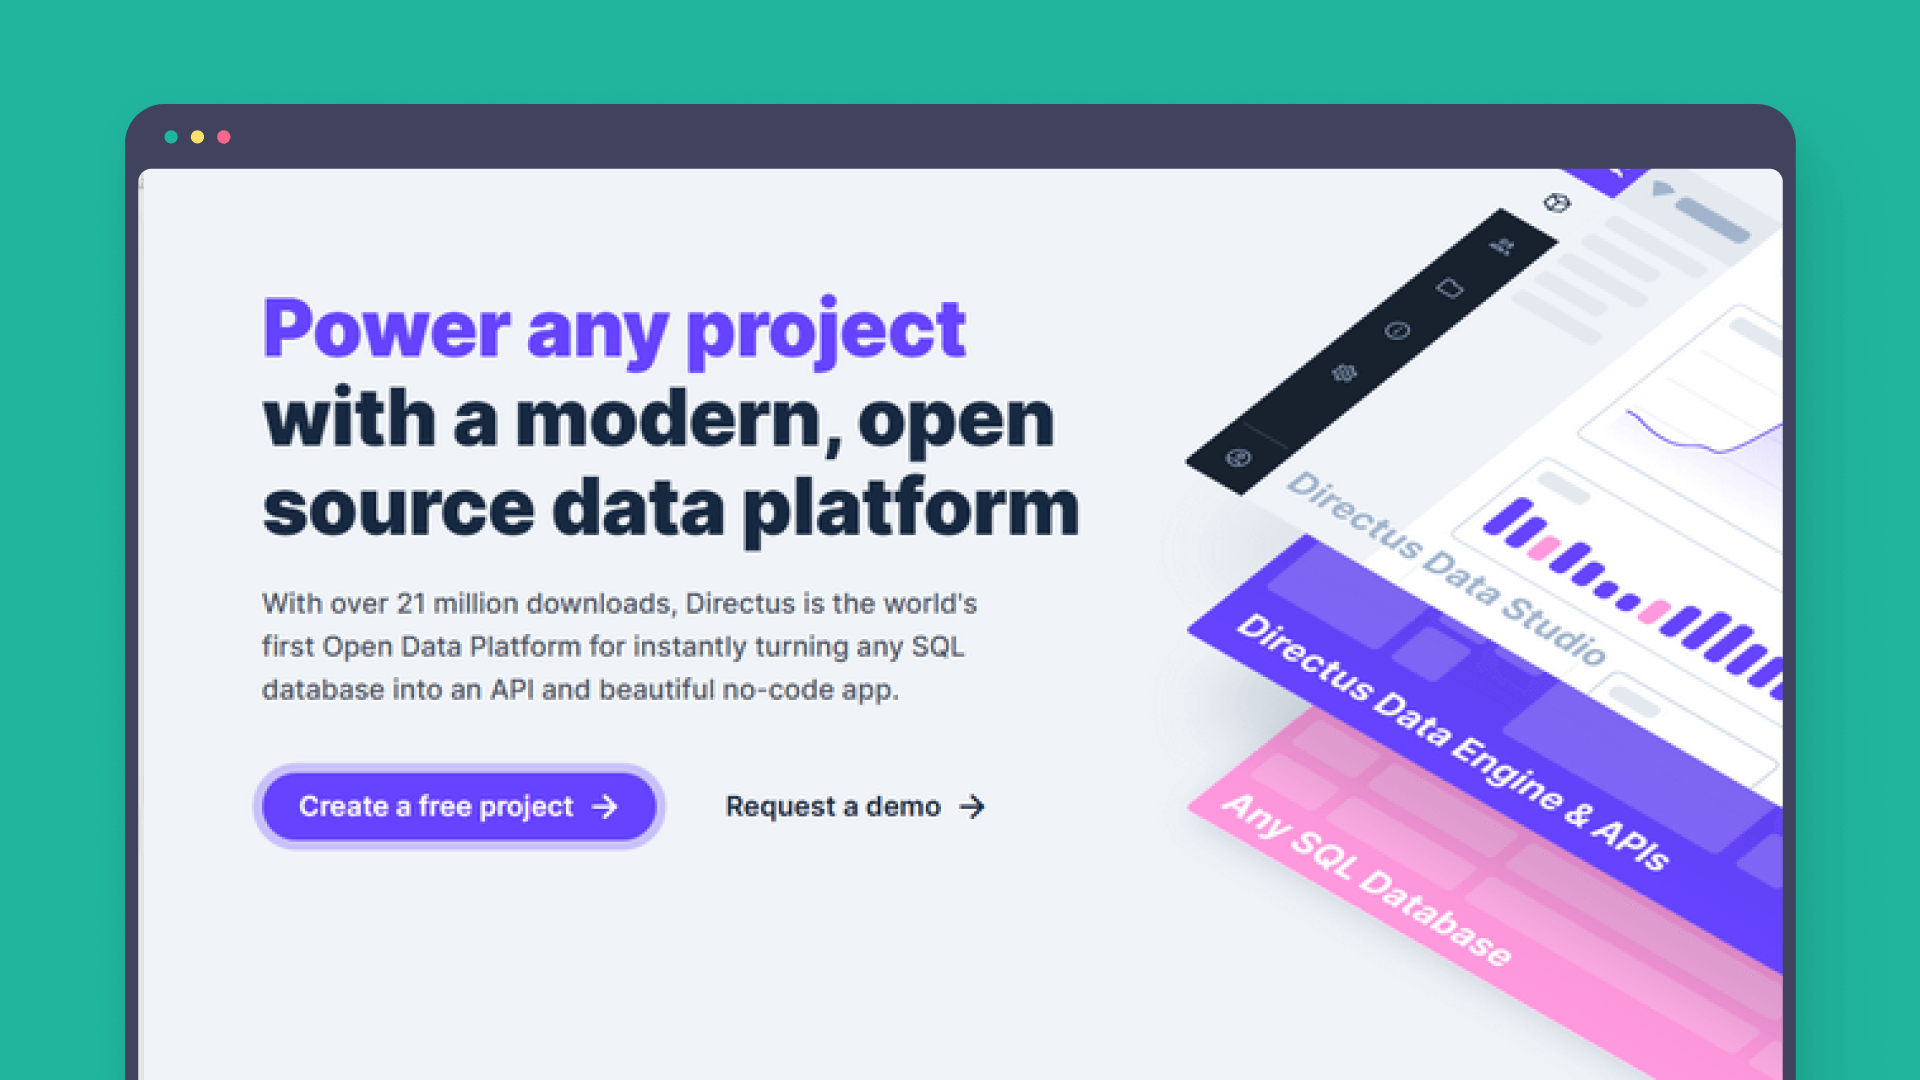 Directus is an open-source data platform